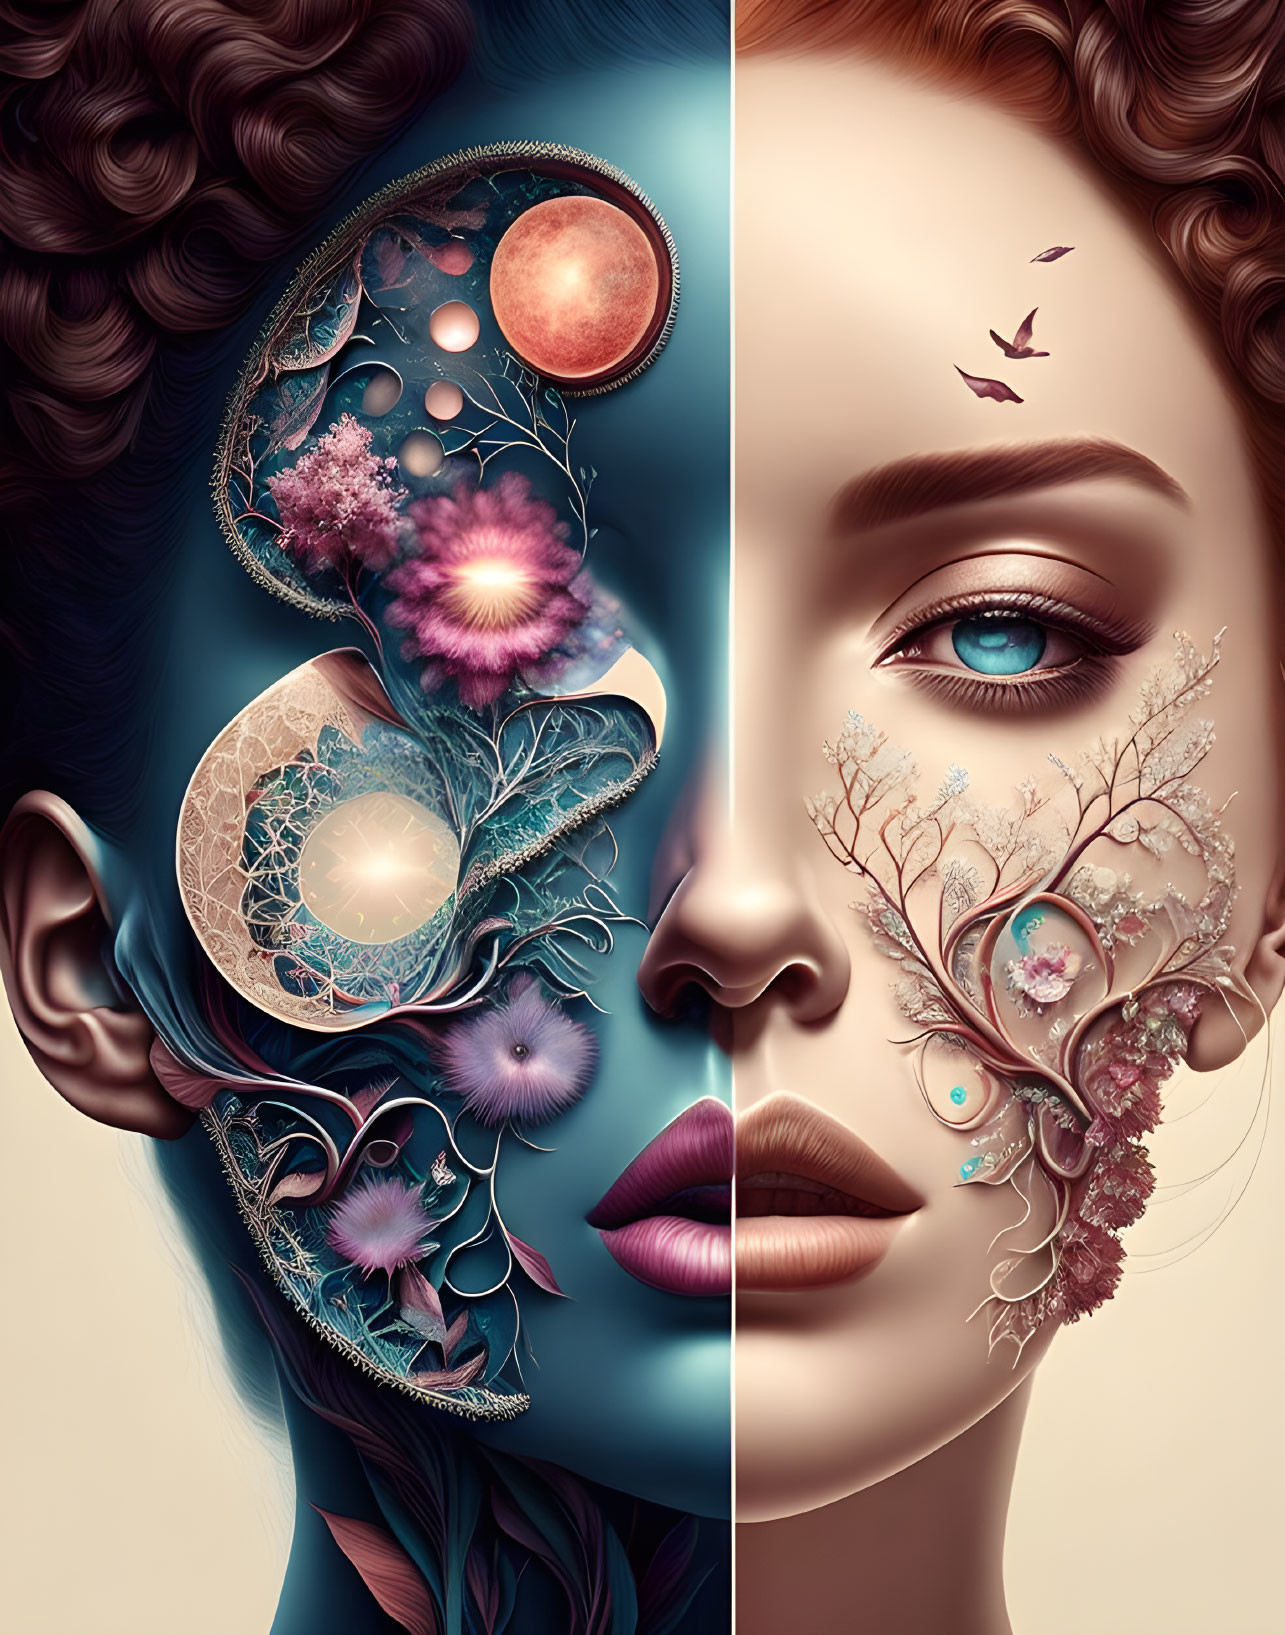 Split-face digital artwork showcasing cosmic and floral elements.